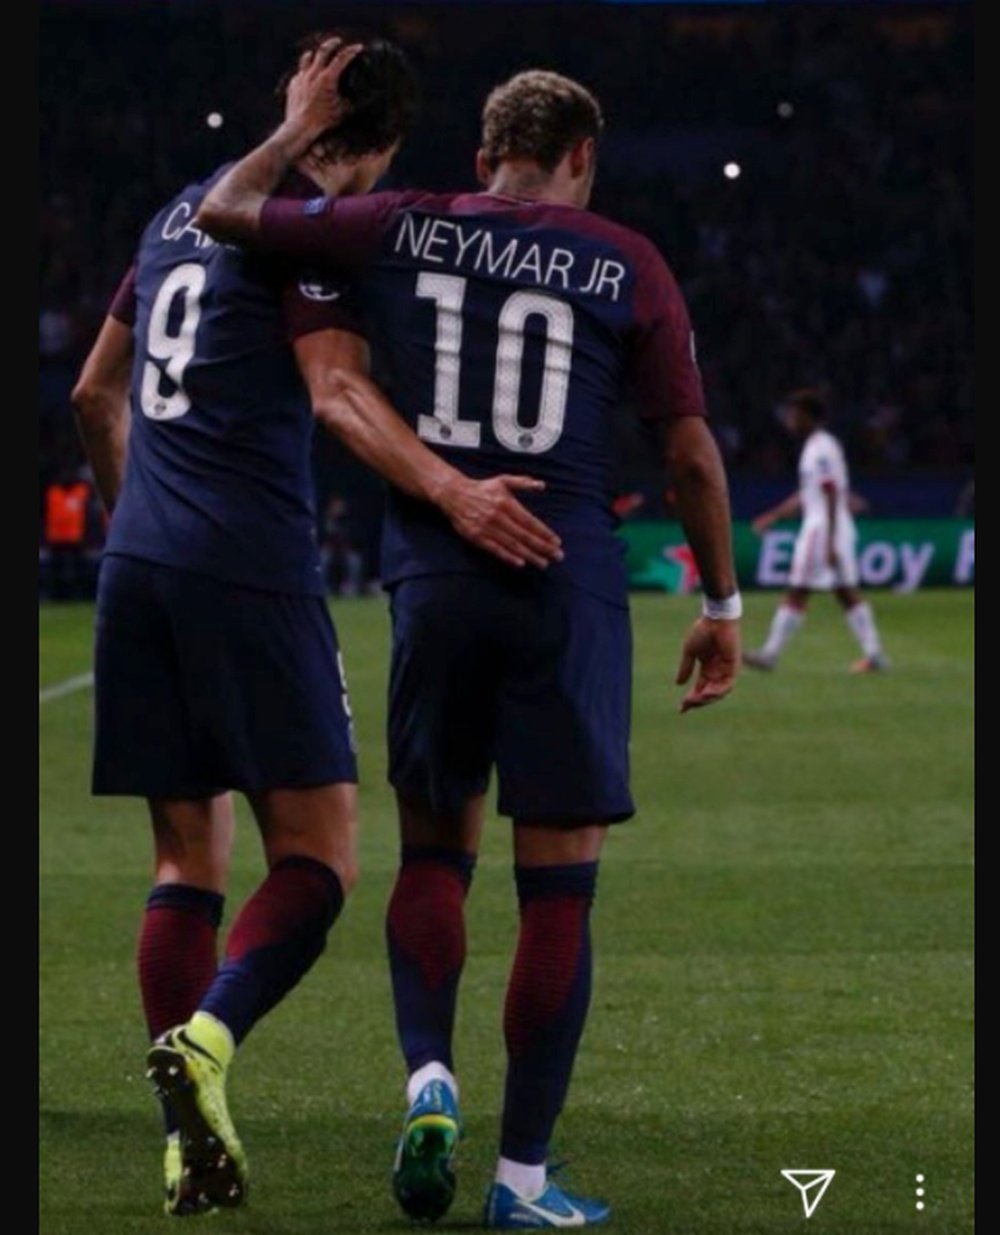 Neymar et Cavani lors de la rencontre face au Bayern. Instagram/NeymarJR